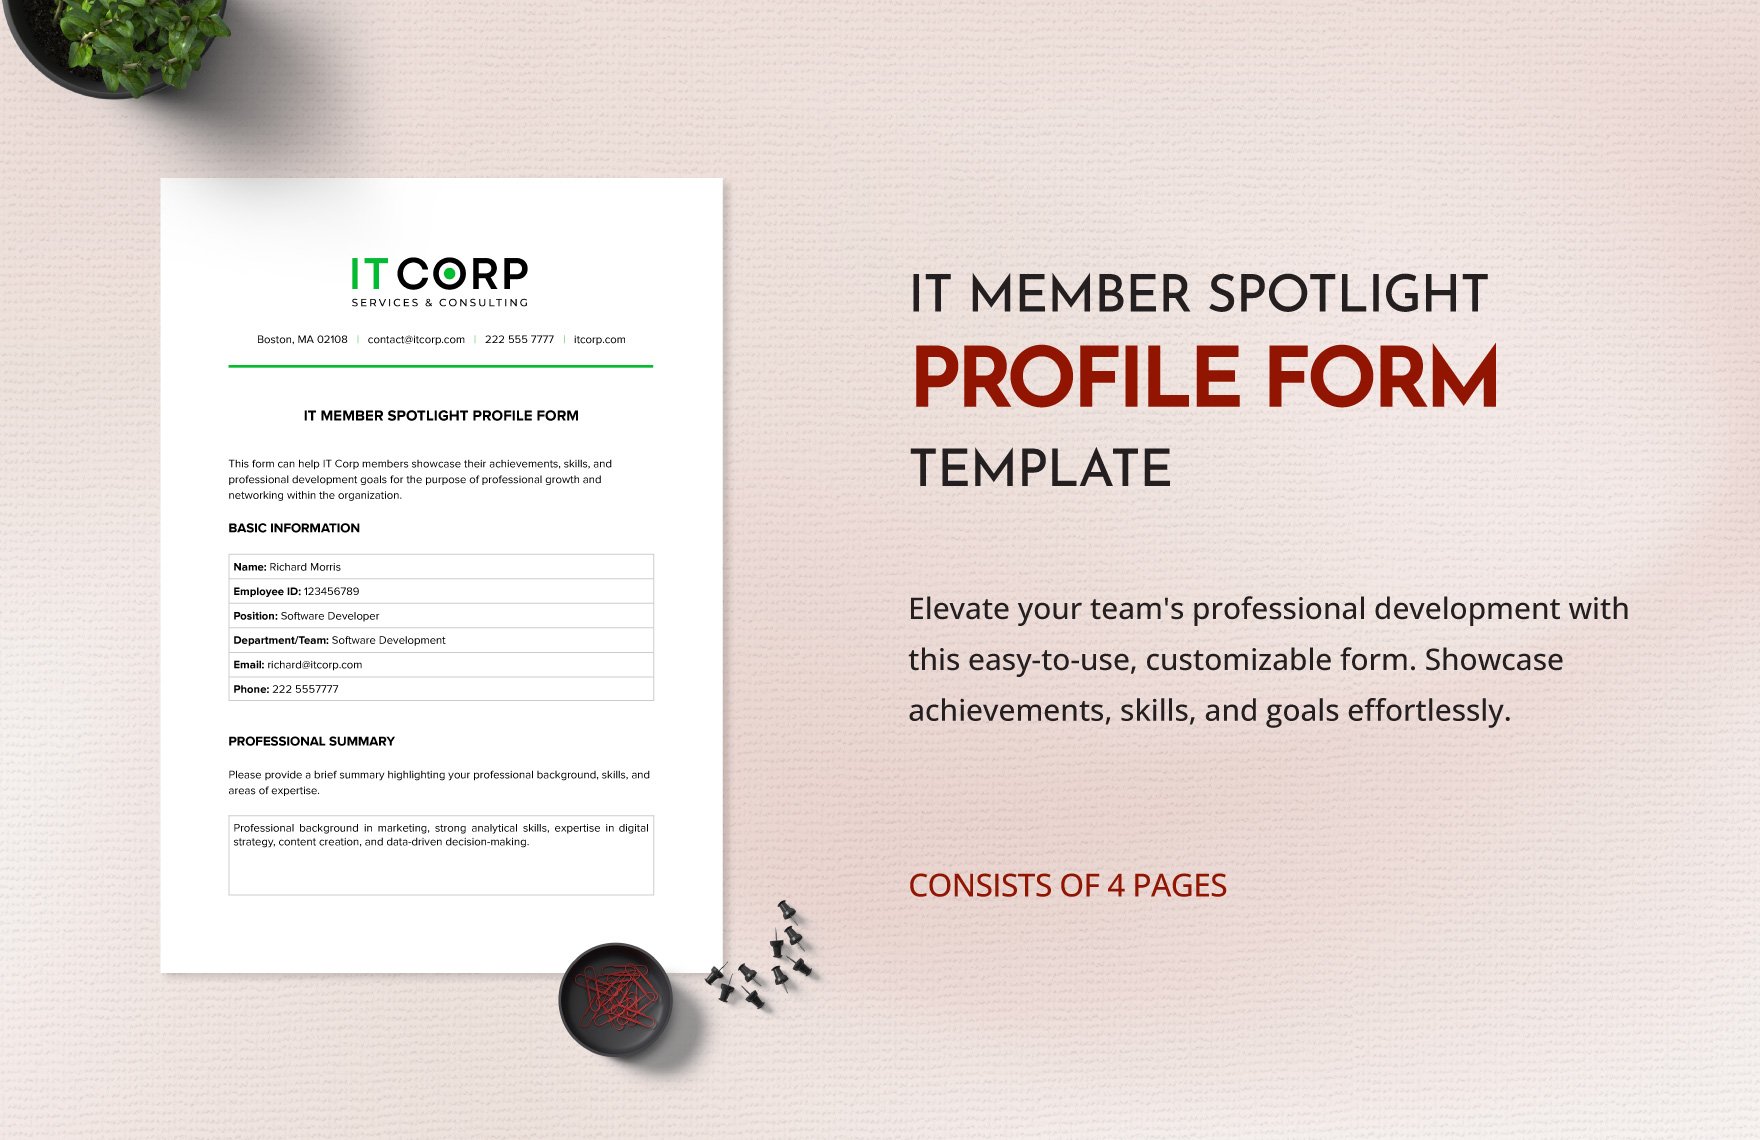 IT Member Spotlight Profile Form Template